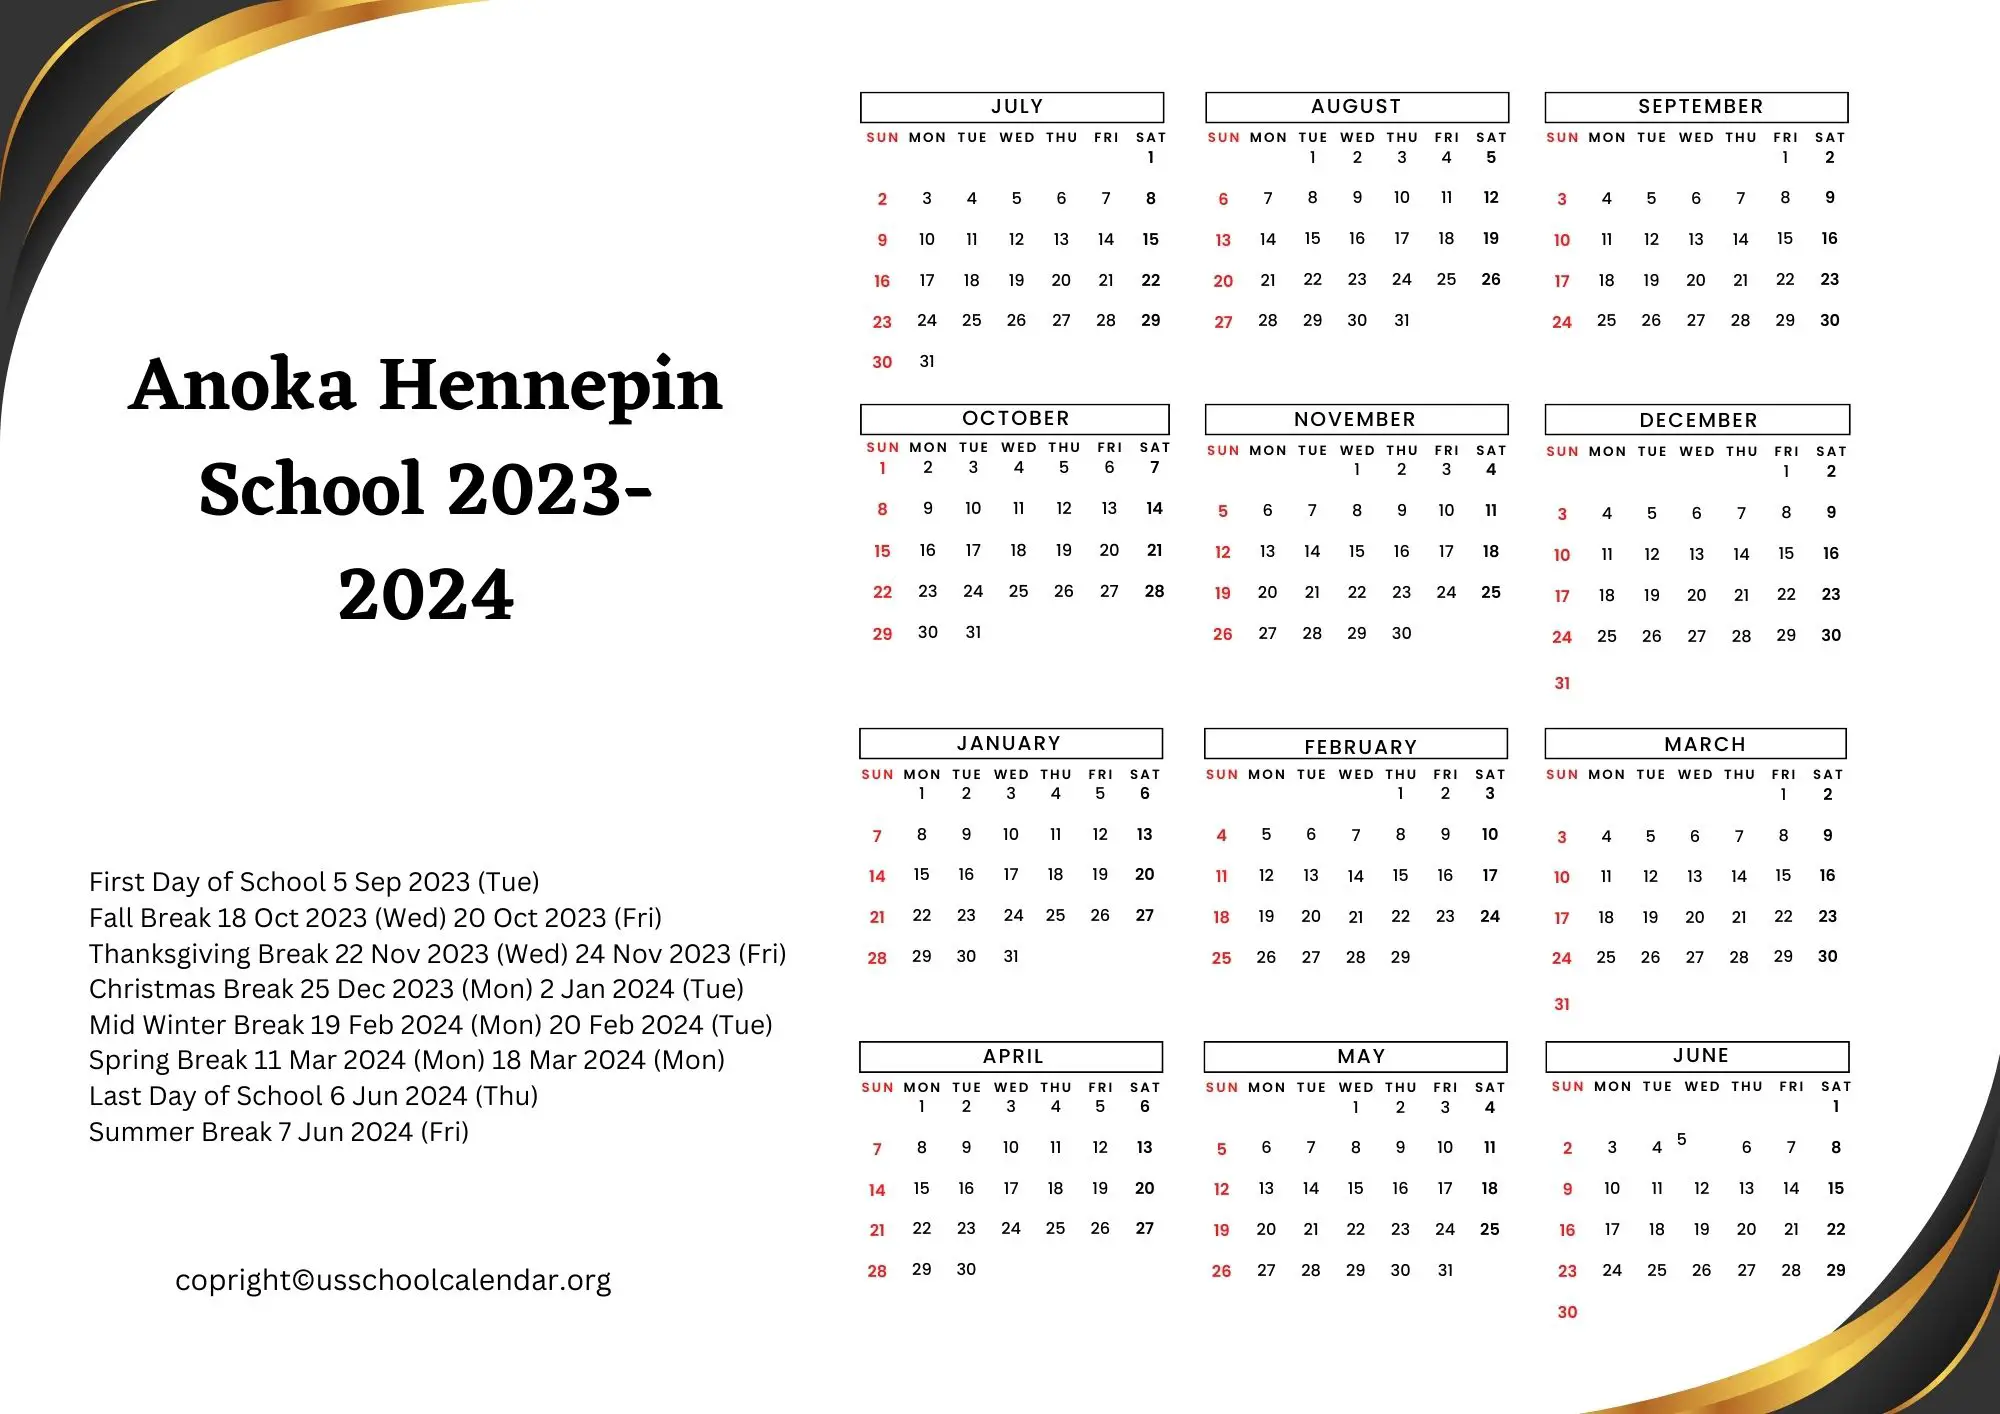 Anoka Hennepin School Calendar with Holidays 2023 2024